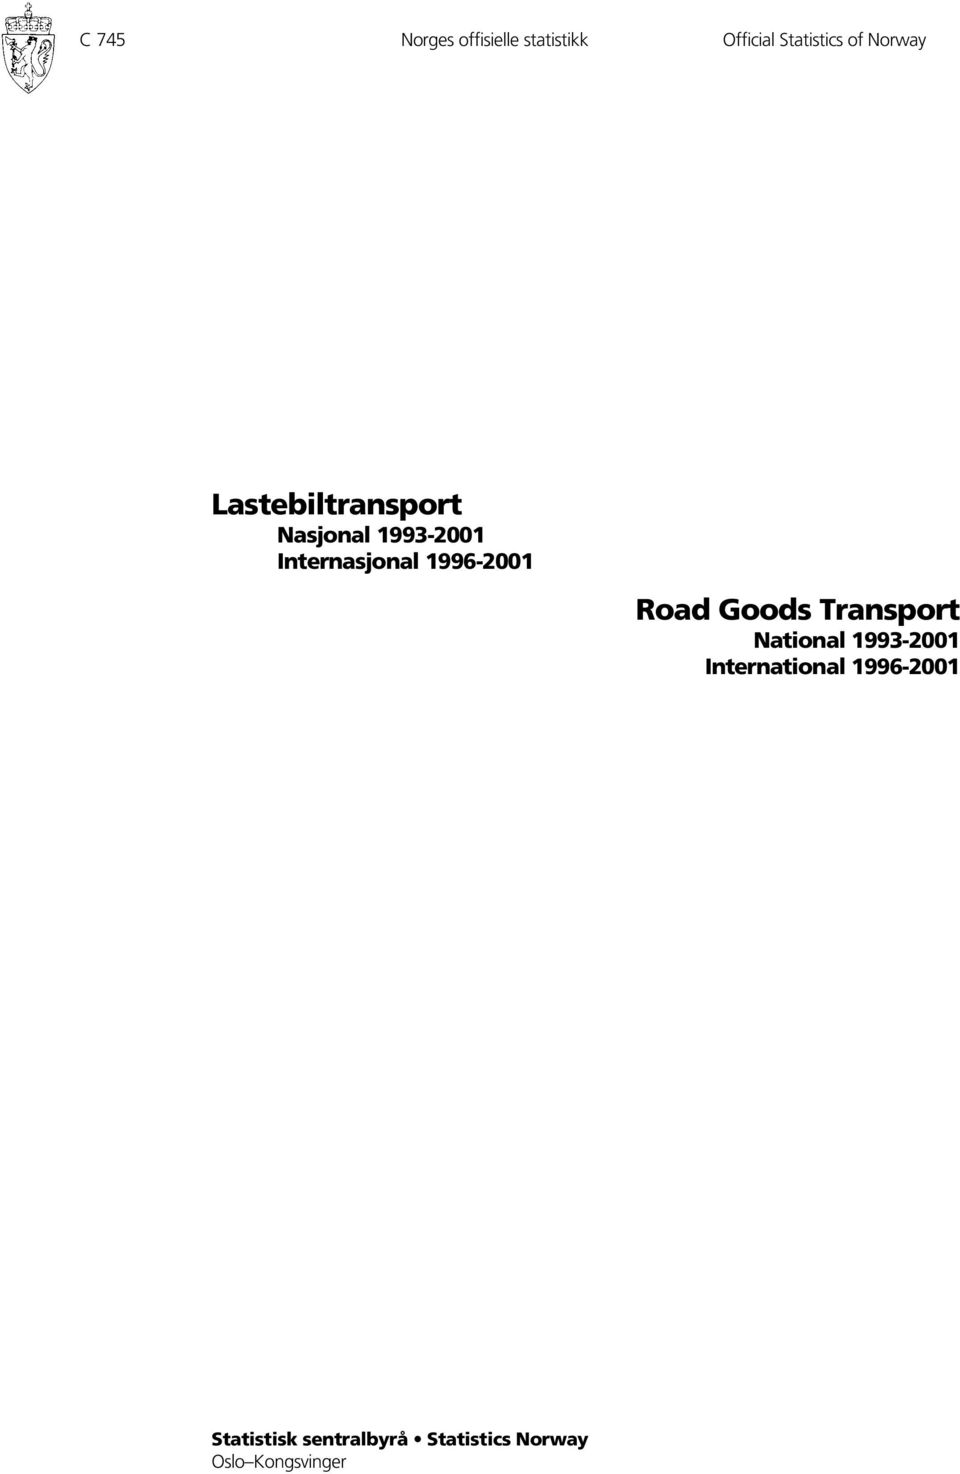 1996-2001 Road Goods Transport National 1993-2001